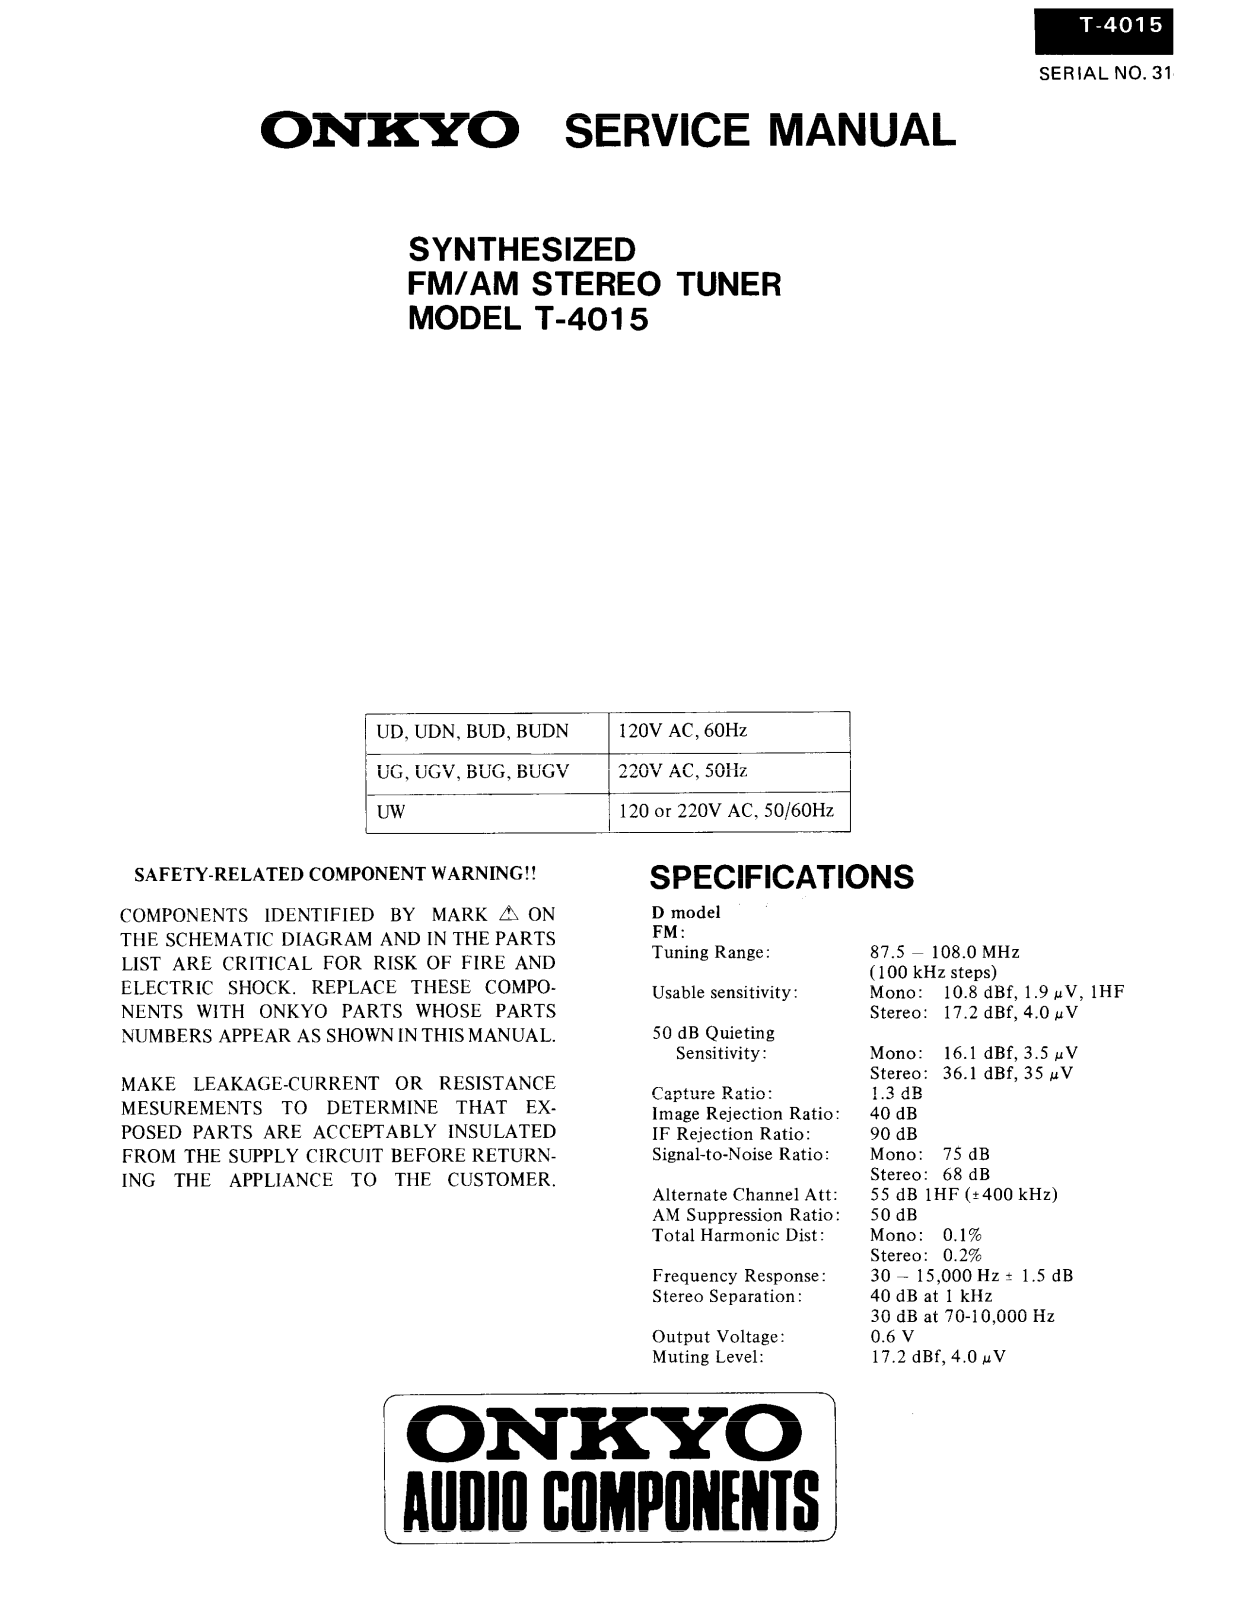 Onkyo T-4015 Service manual